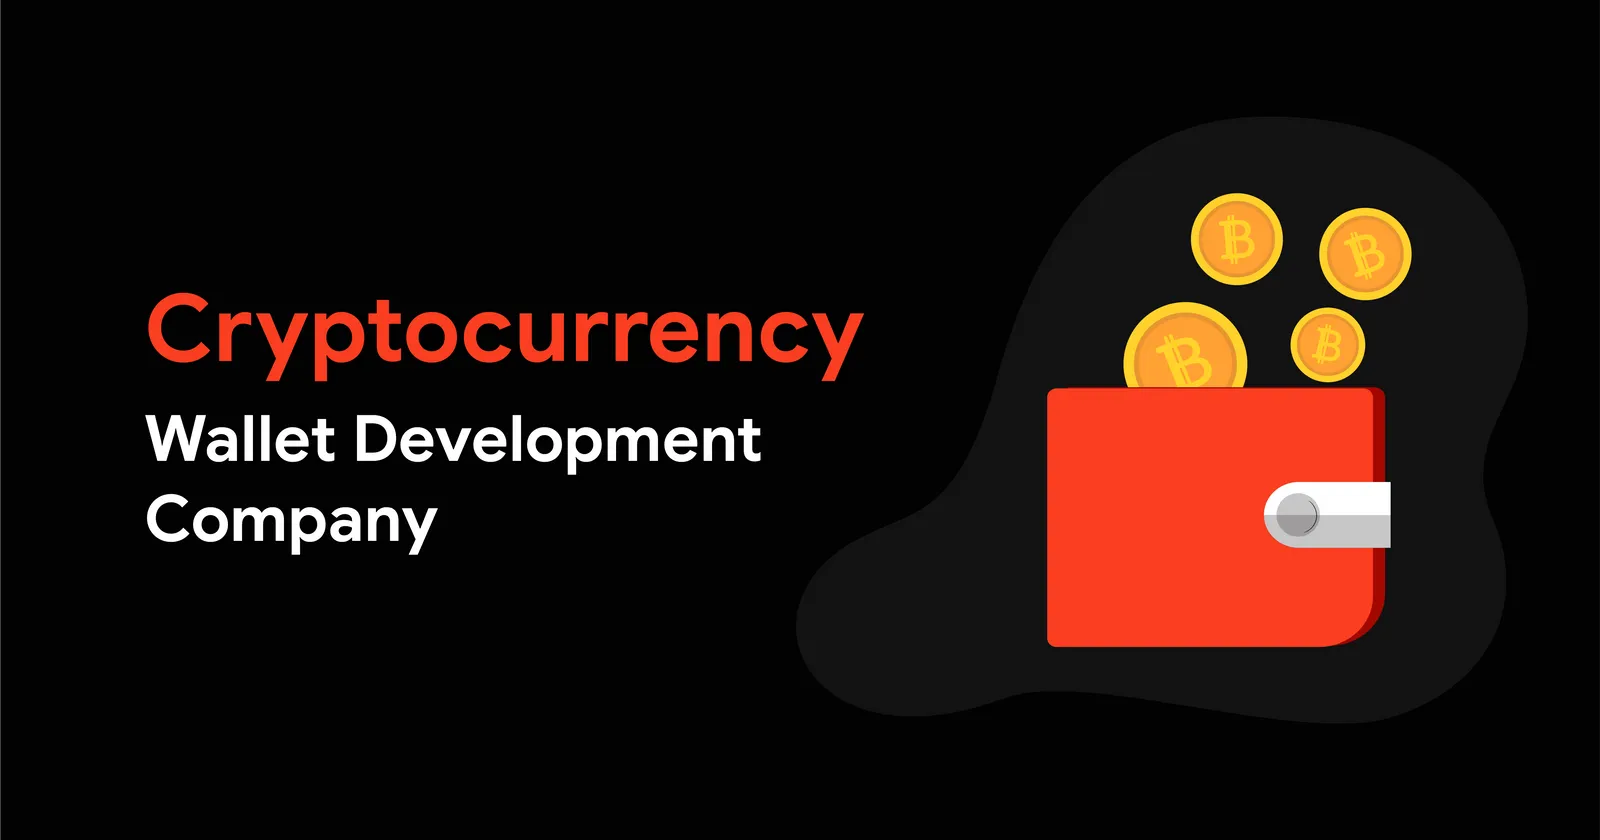 Cryptocurrecy Wallet Development Services - Blockchain Firm